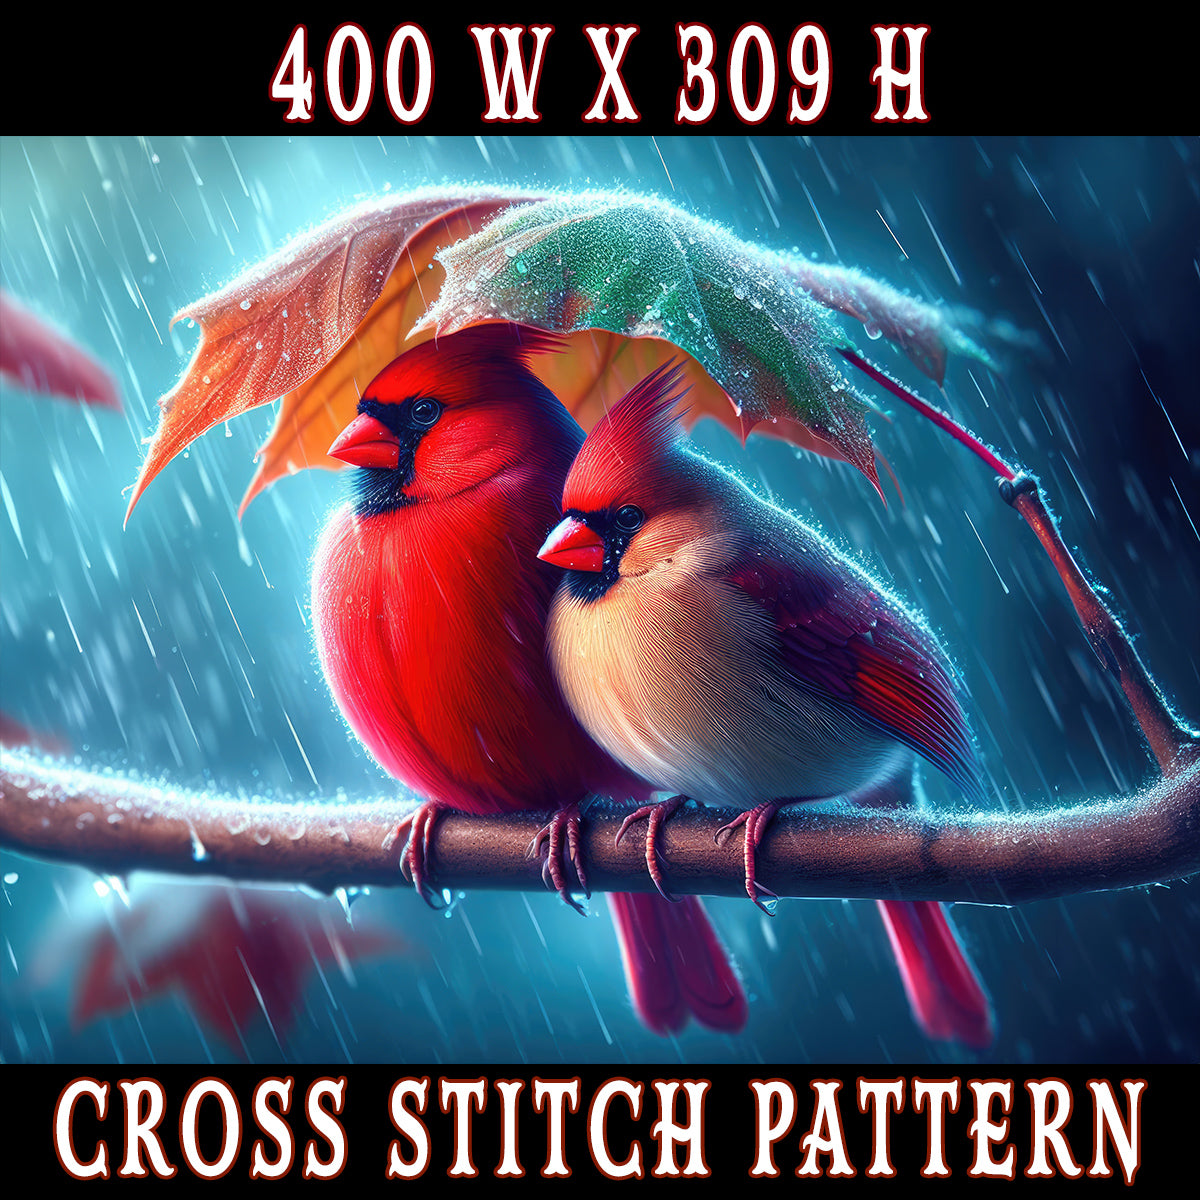 A Wet and Wonderful Encounter Cross Stitch Pattern